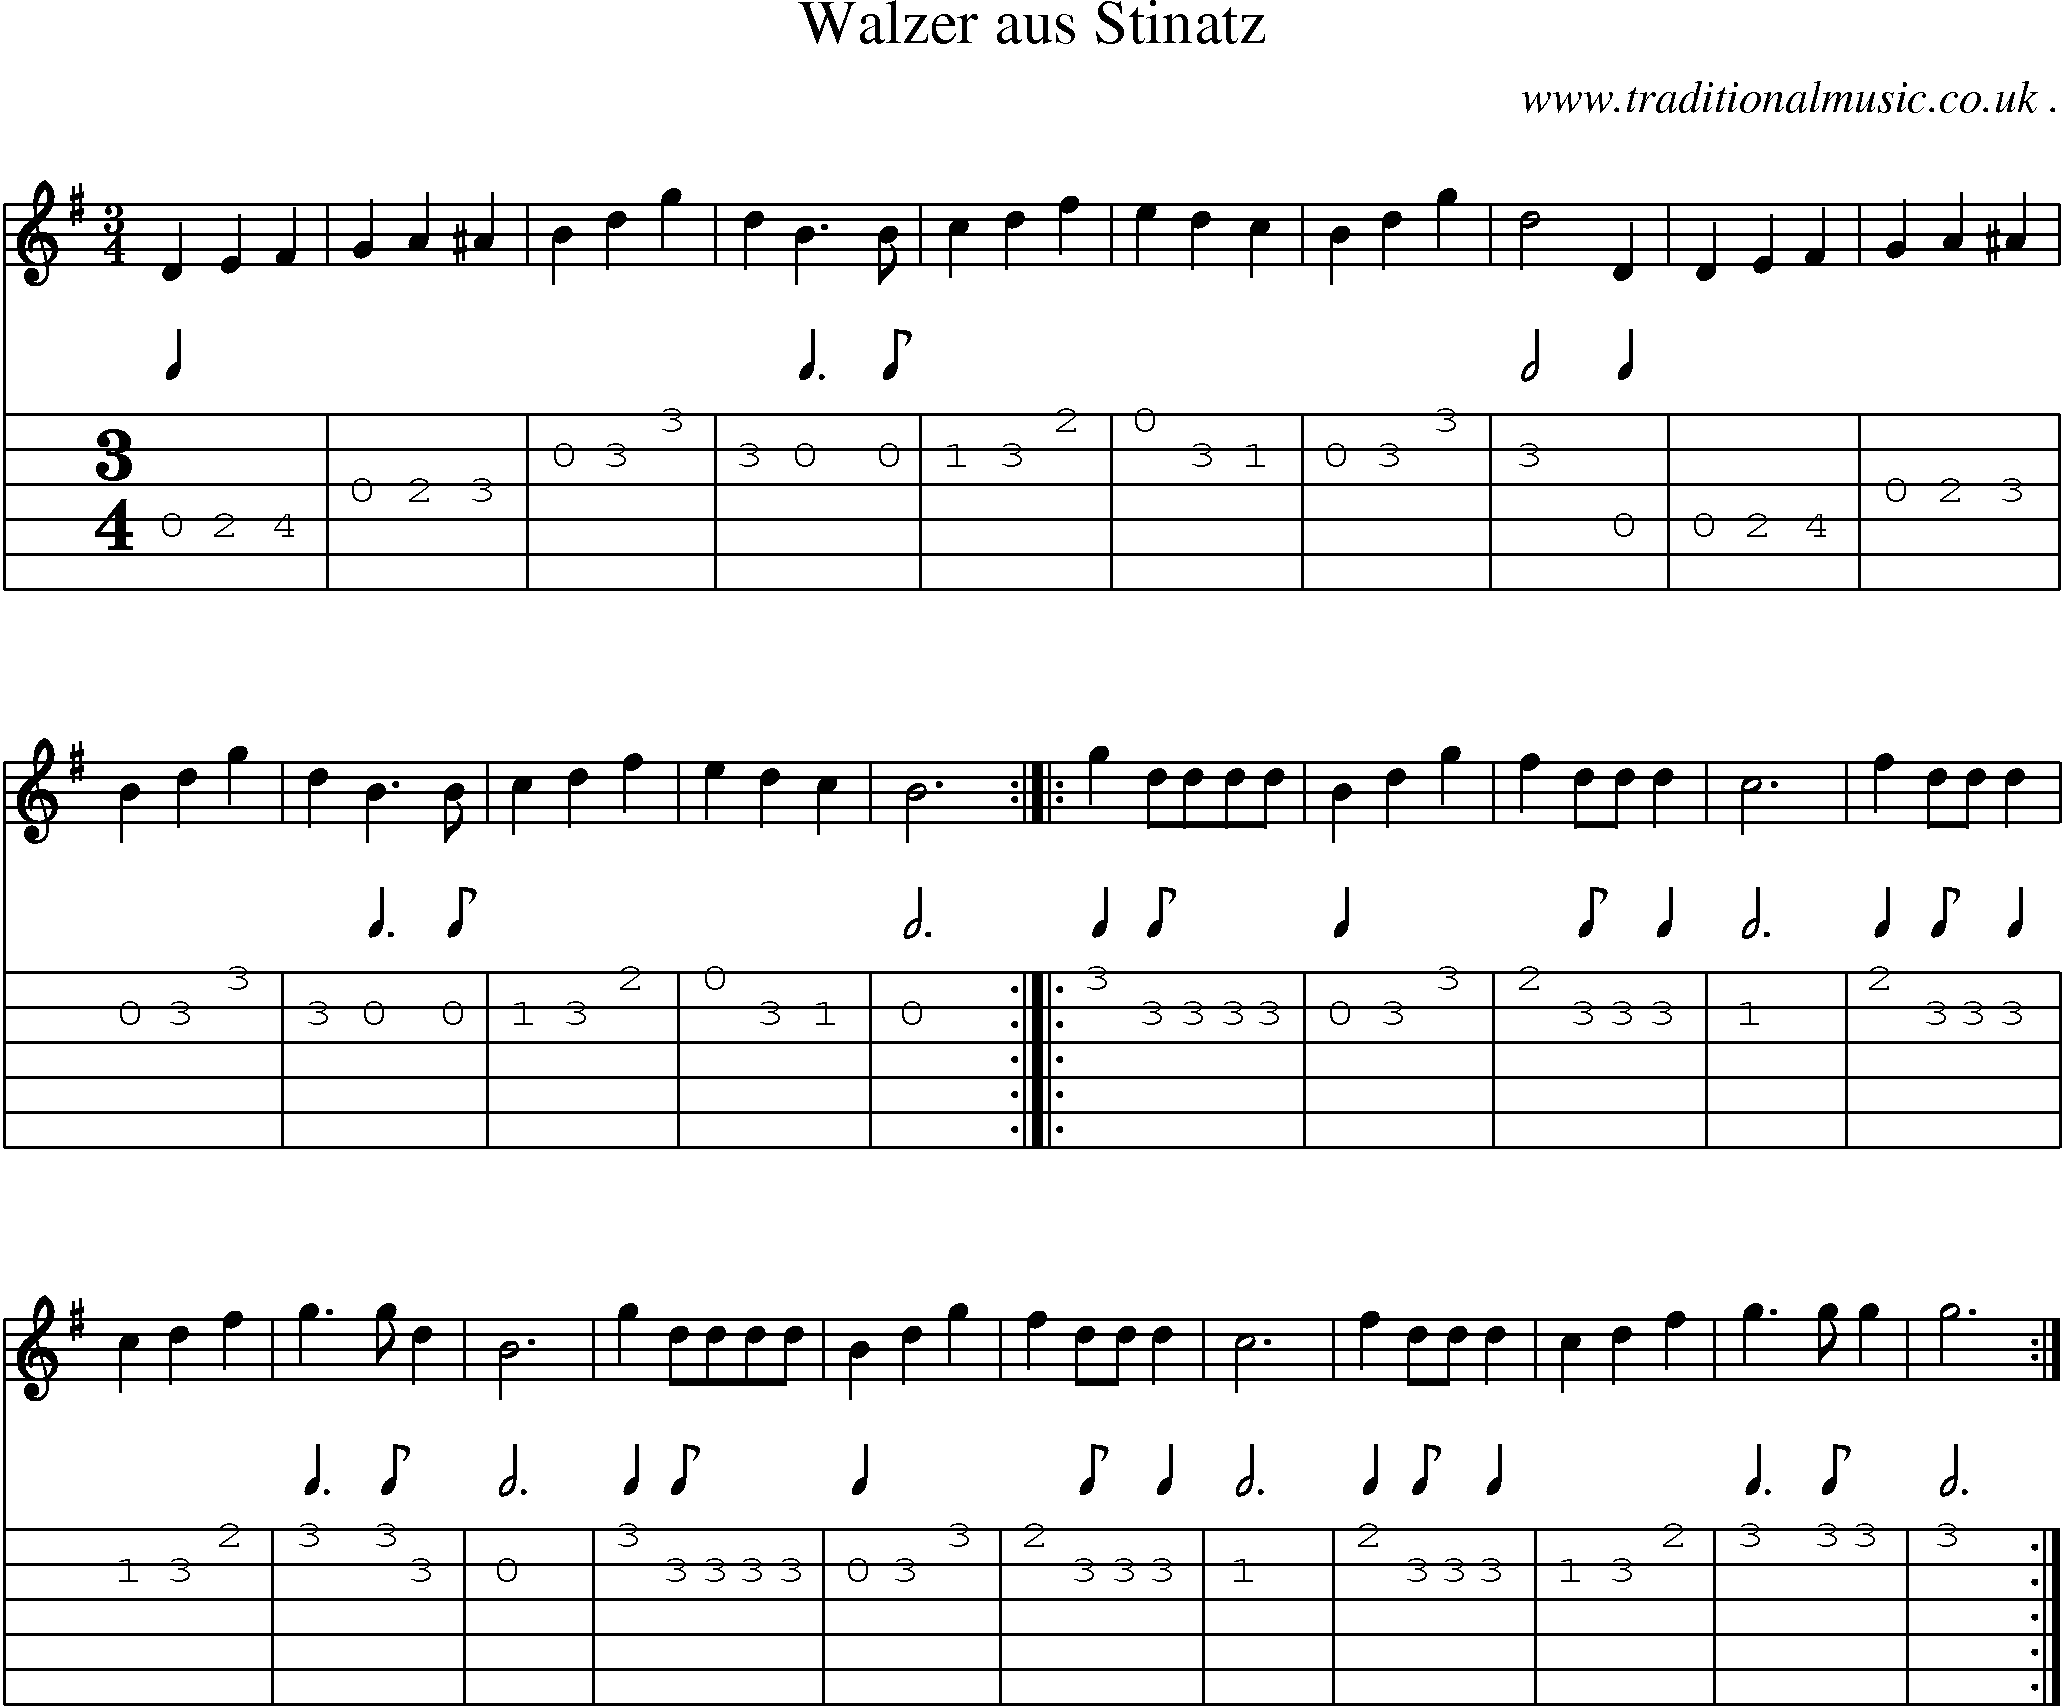 Sheet-Music and Guitar Tabs for Walzer Aus Stinatz